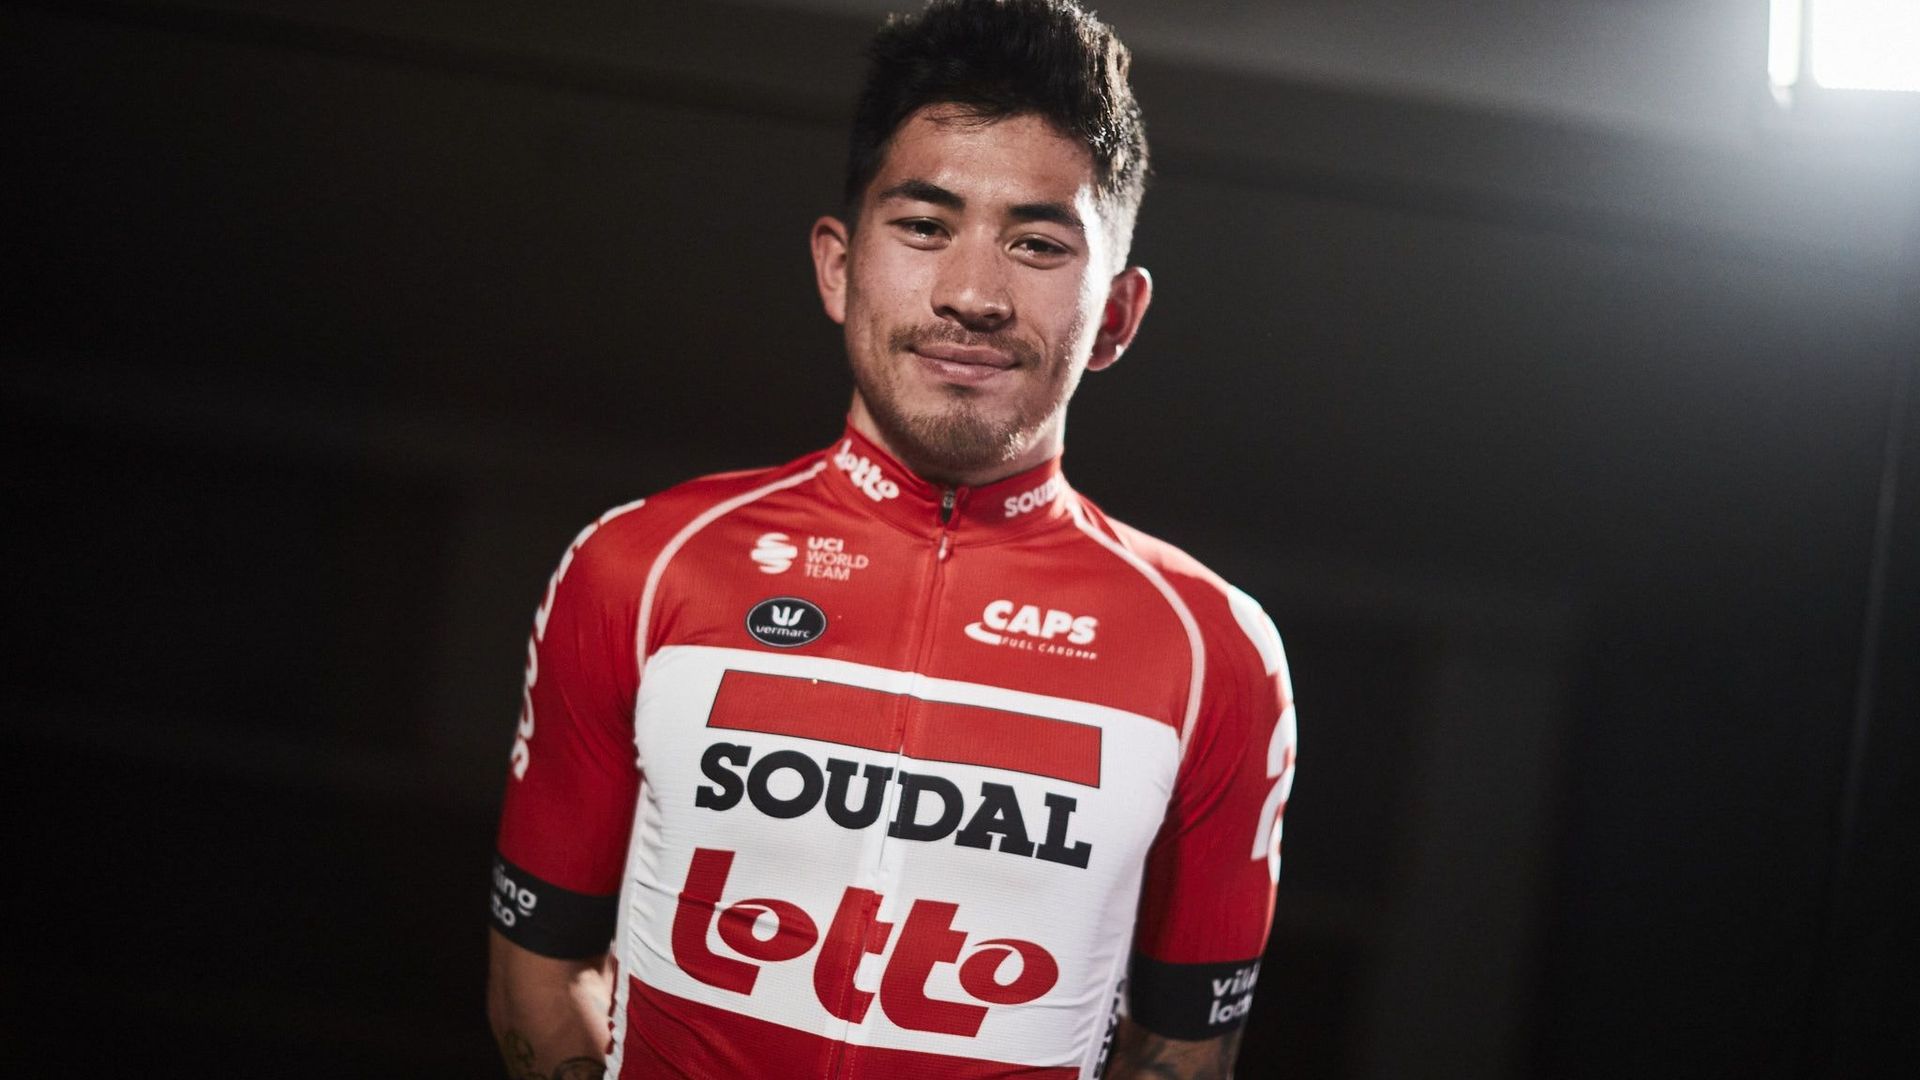 Caleb Ewan sera le sprinteur leader de l'équipe Lotto Soudal sur le Giro